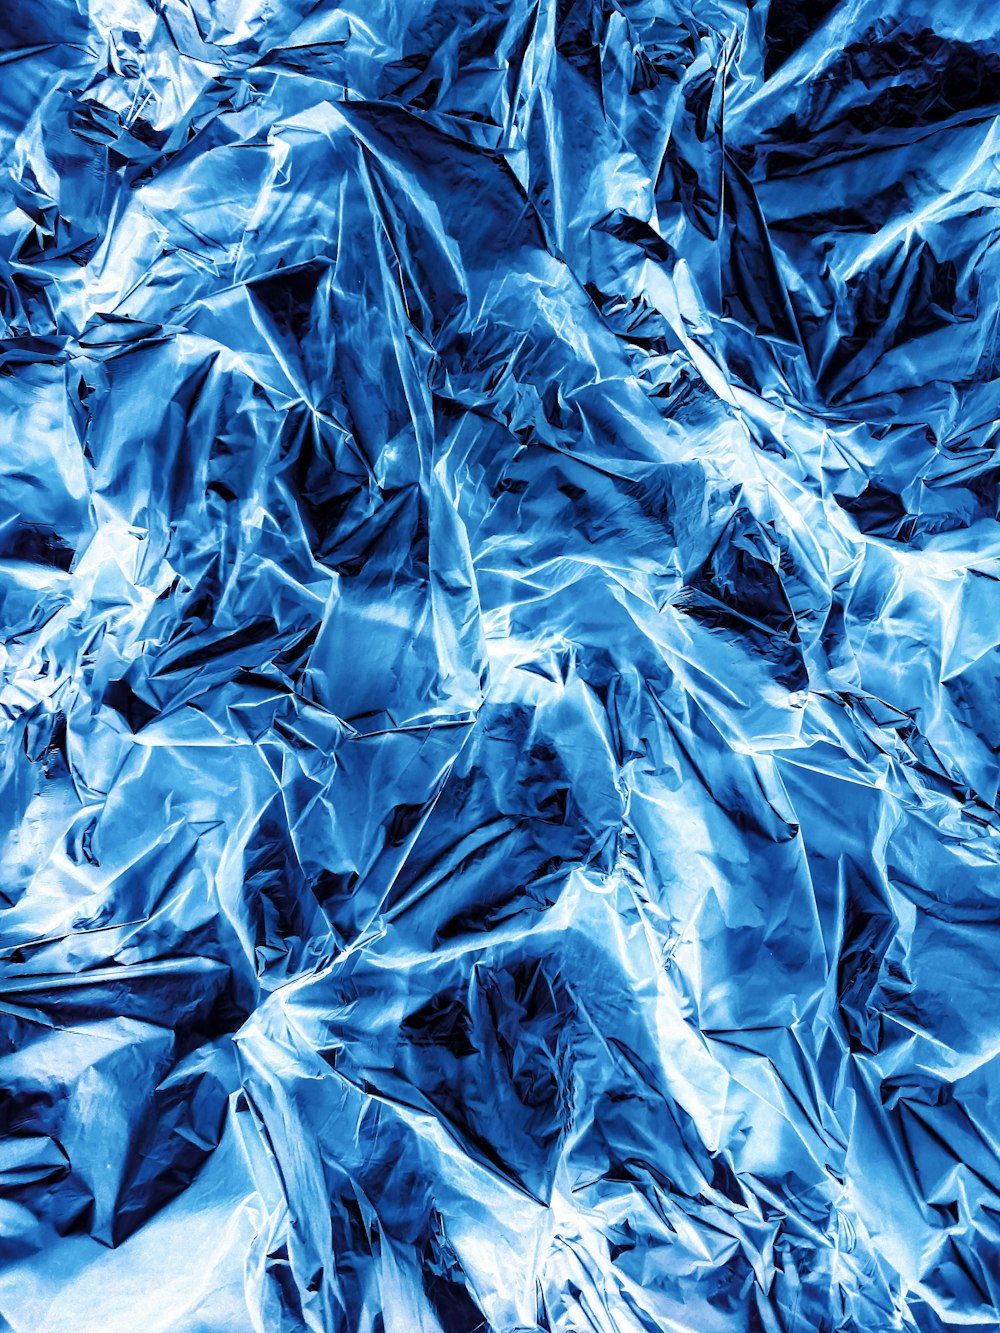 a close up of a sheet of blue foil